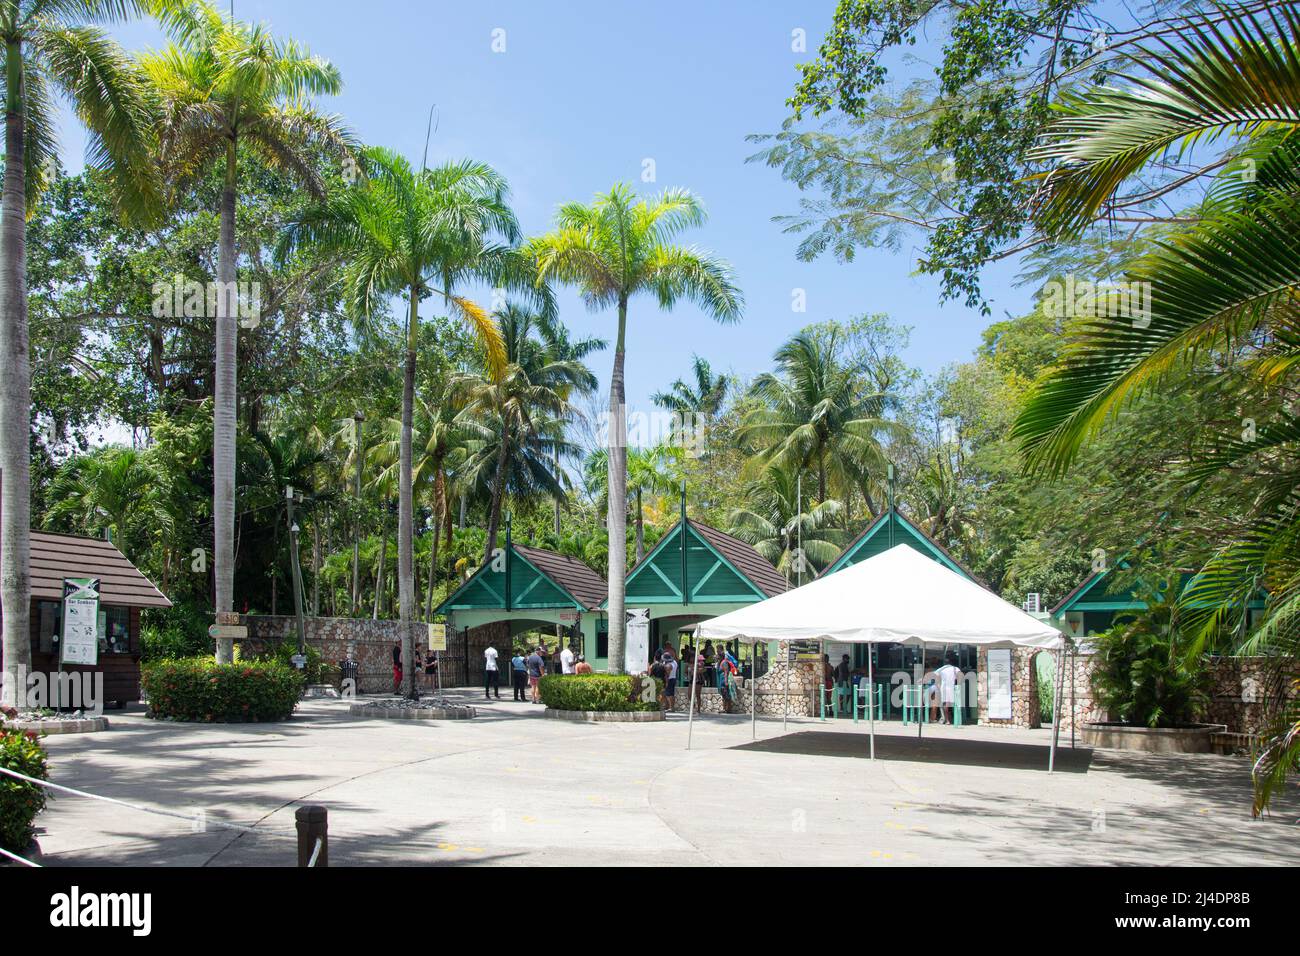 Entrance to Dunns River Falls & Park, Ocho Rios, St Ann Parish, Jamaica, Greater Antilles, Caribbean Stock Photo